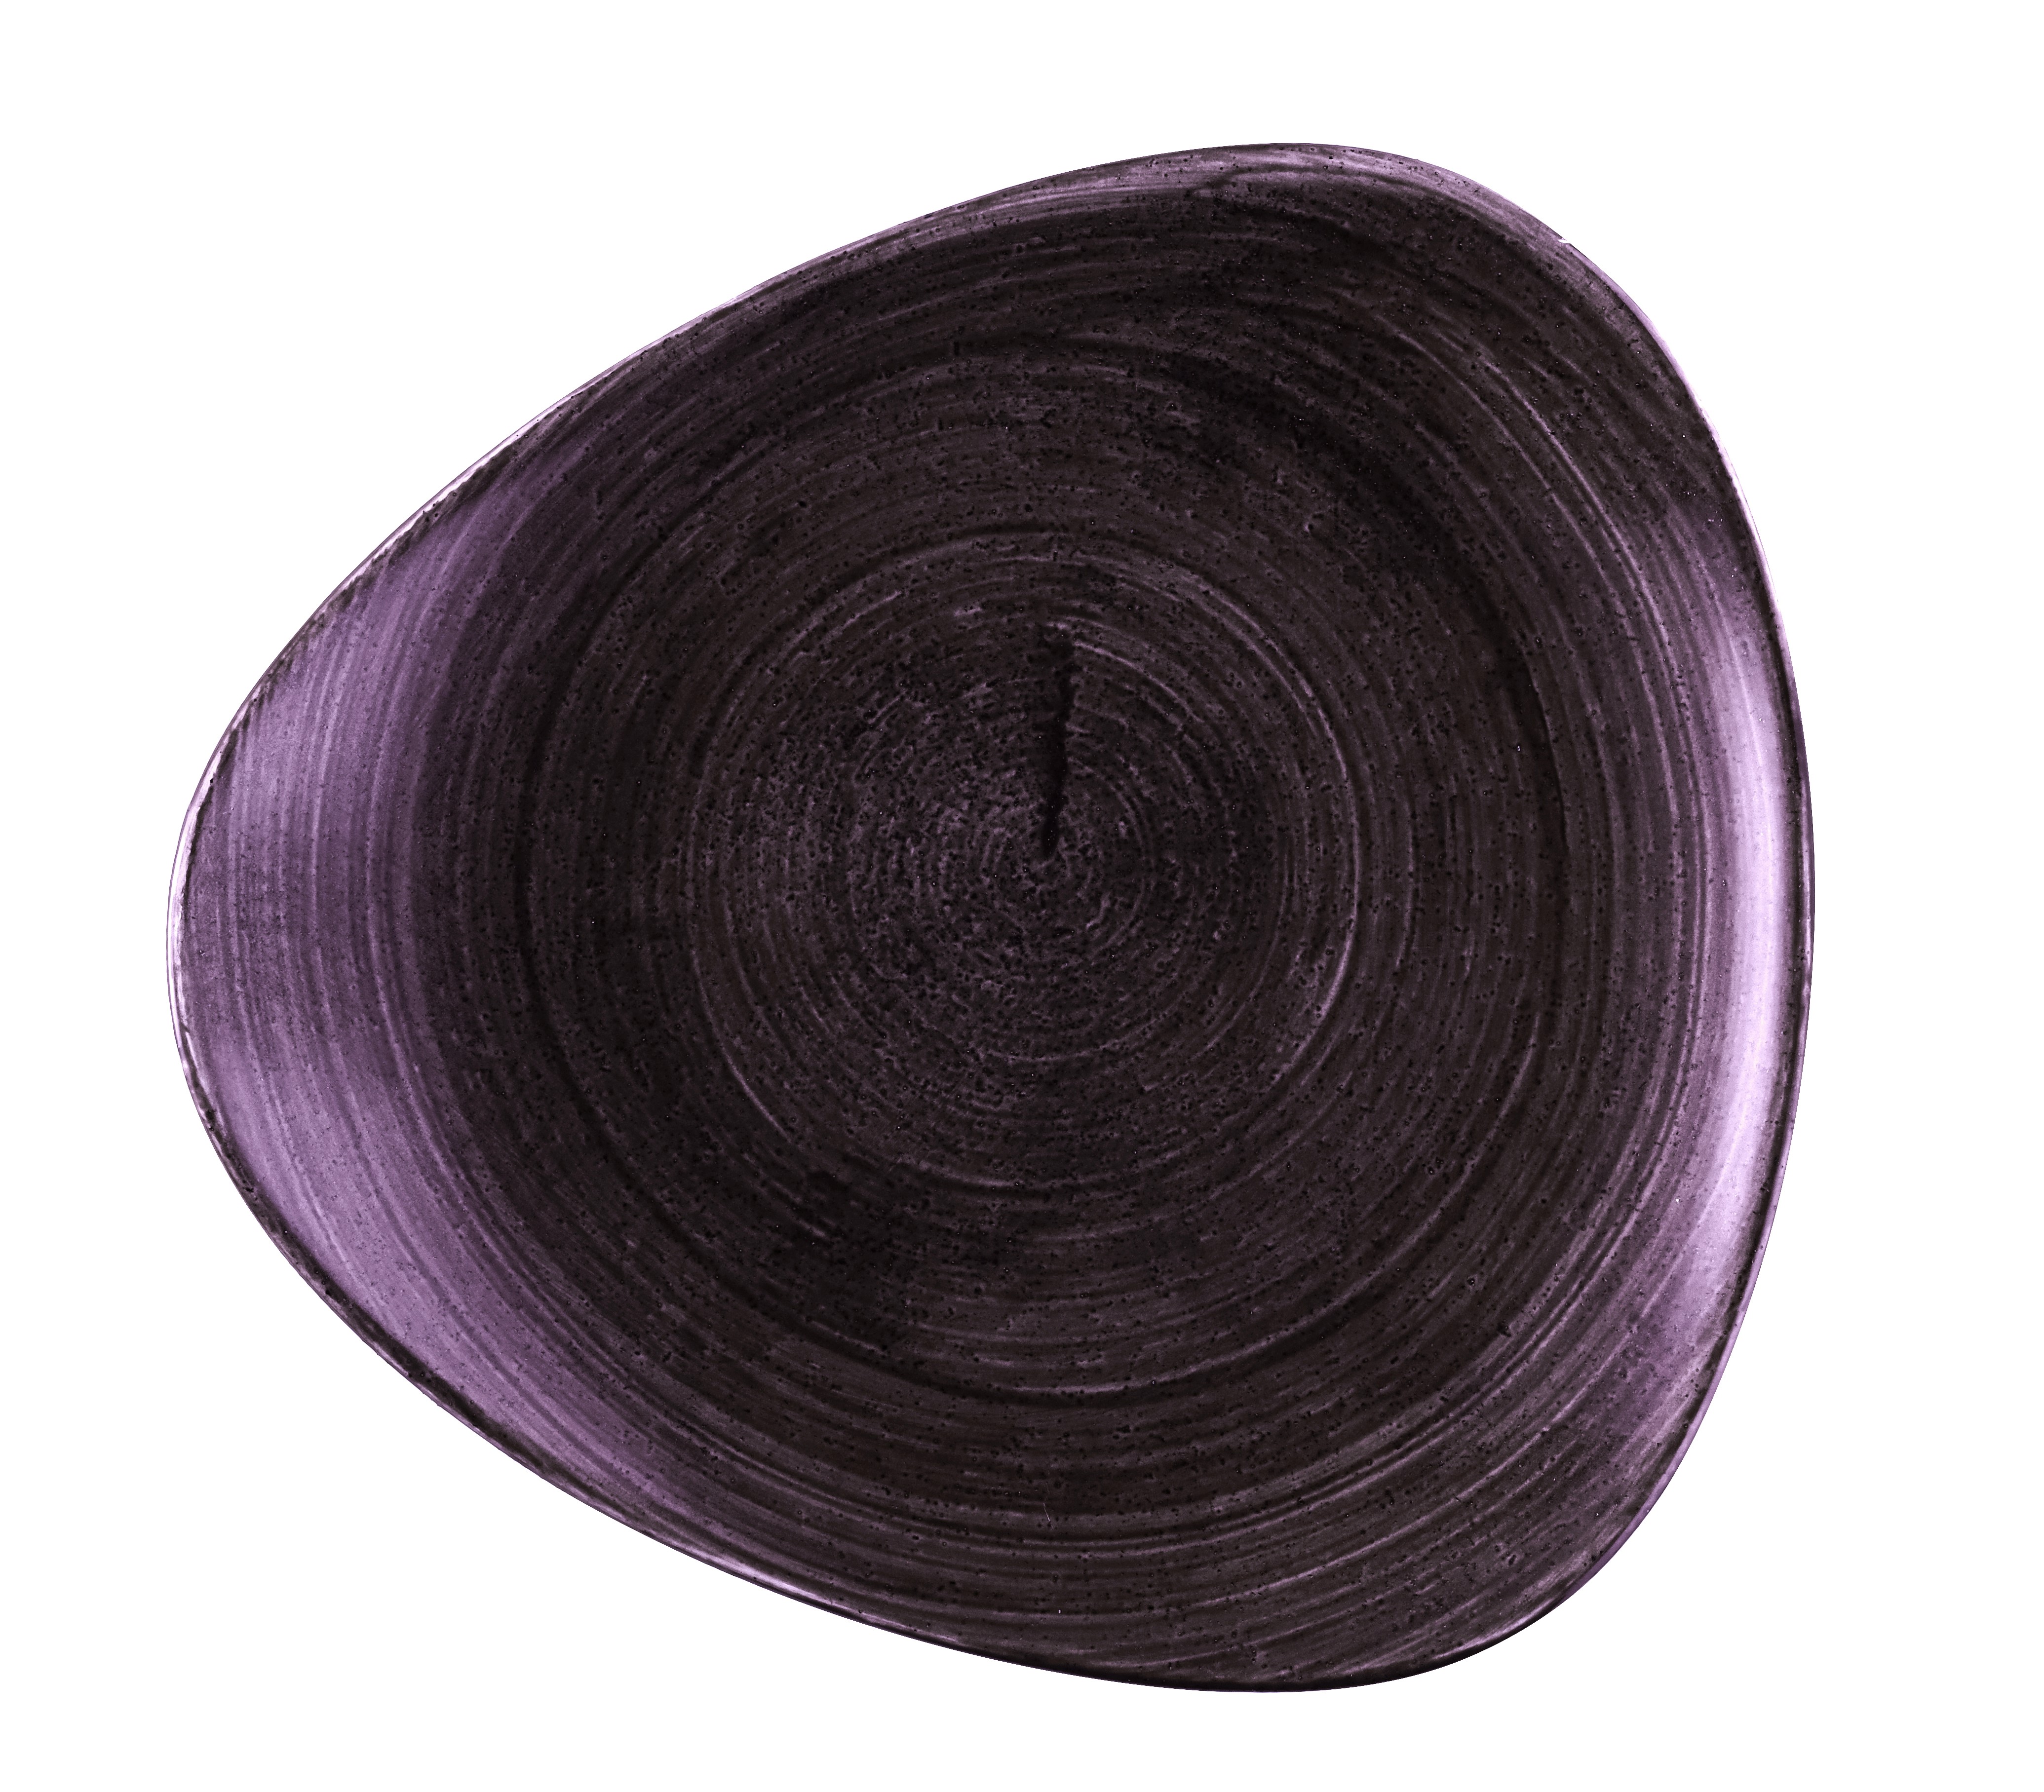 Teller flach dreieckig 26,5cm PATINA deep purple